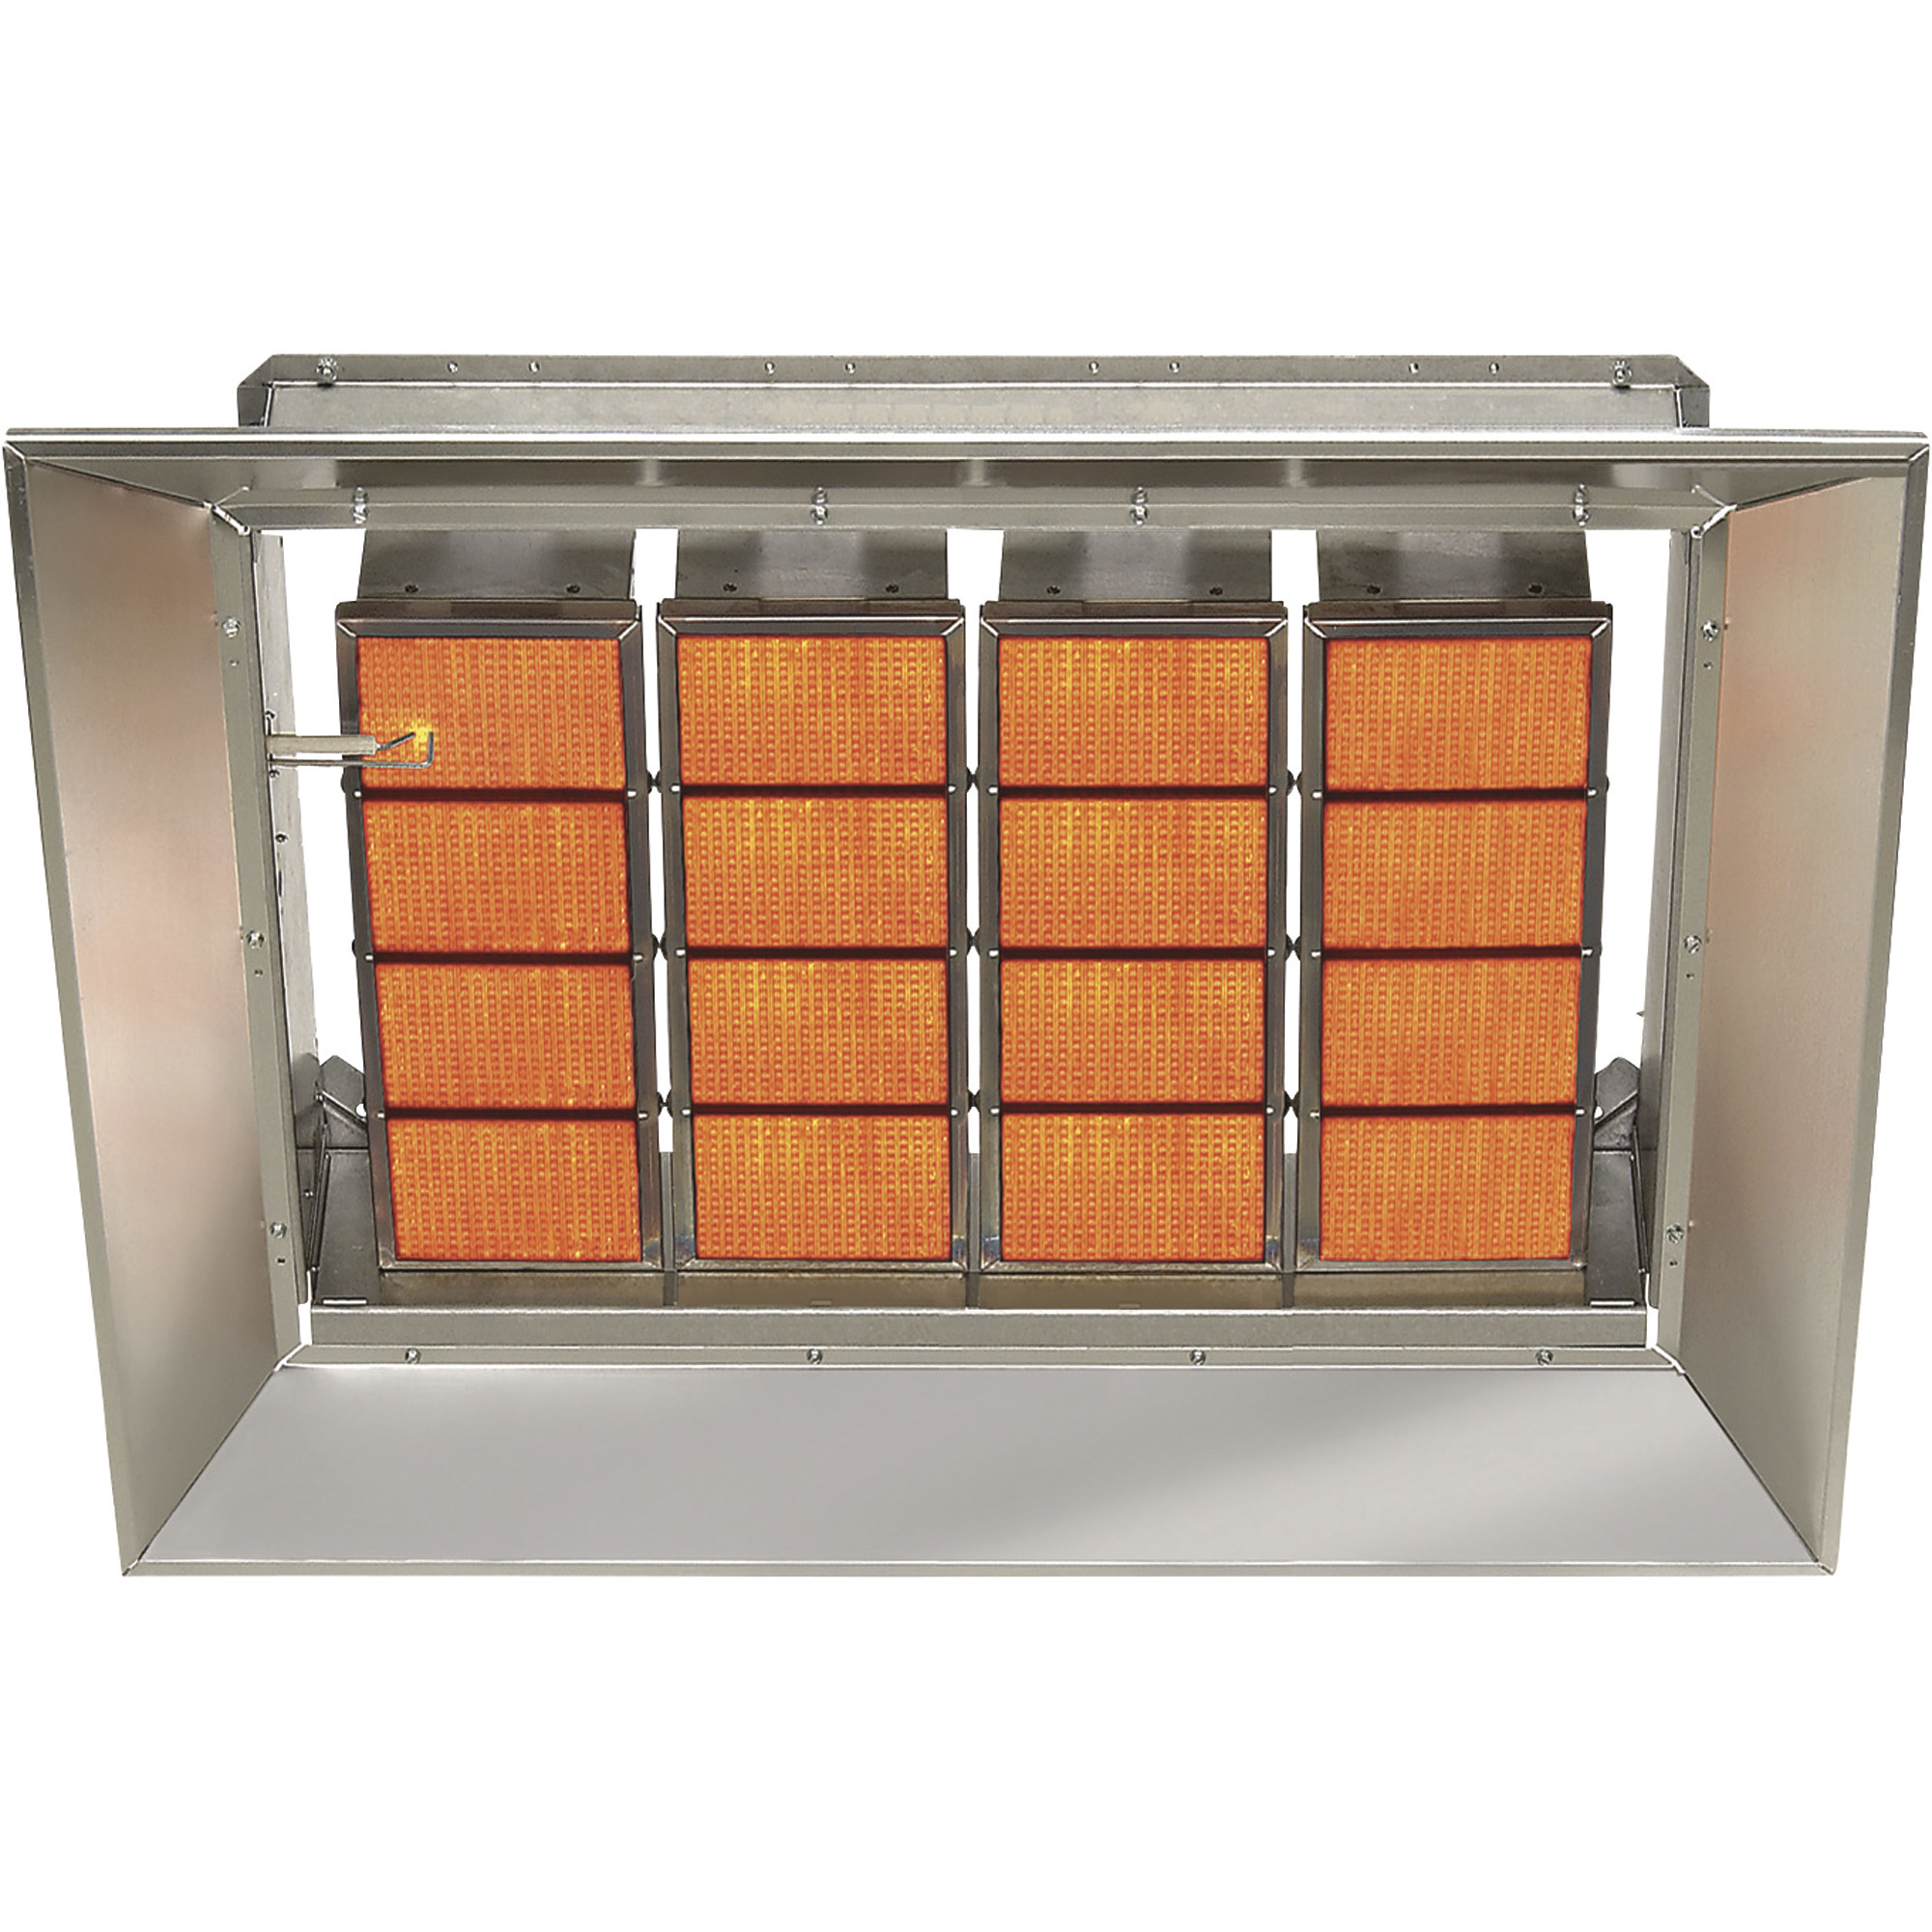 SunStar Heating Products Infrared Ceramic Heater, Natural Gas, 155,000 BTU, Model SG15-N